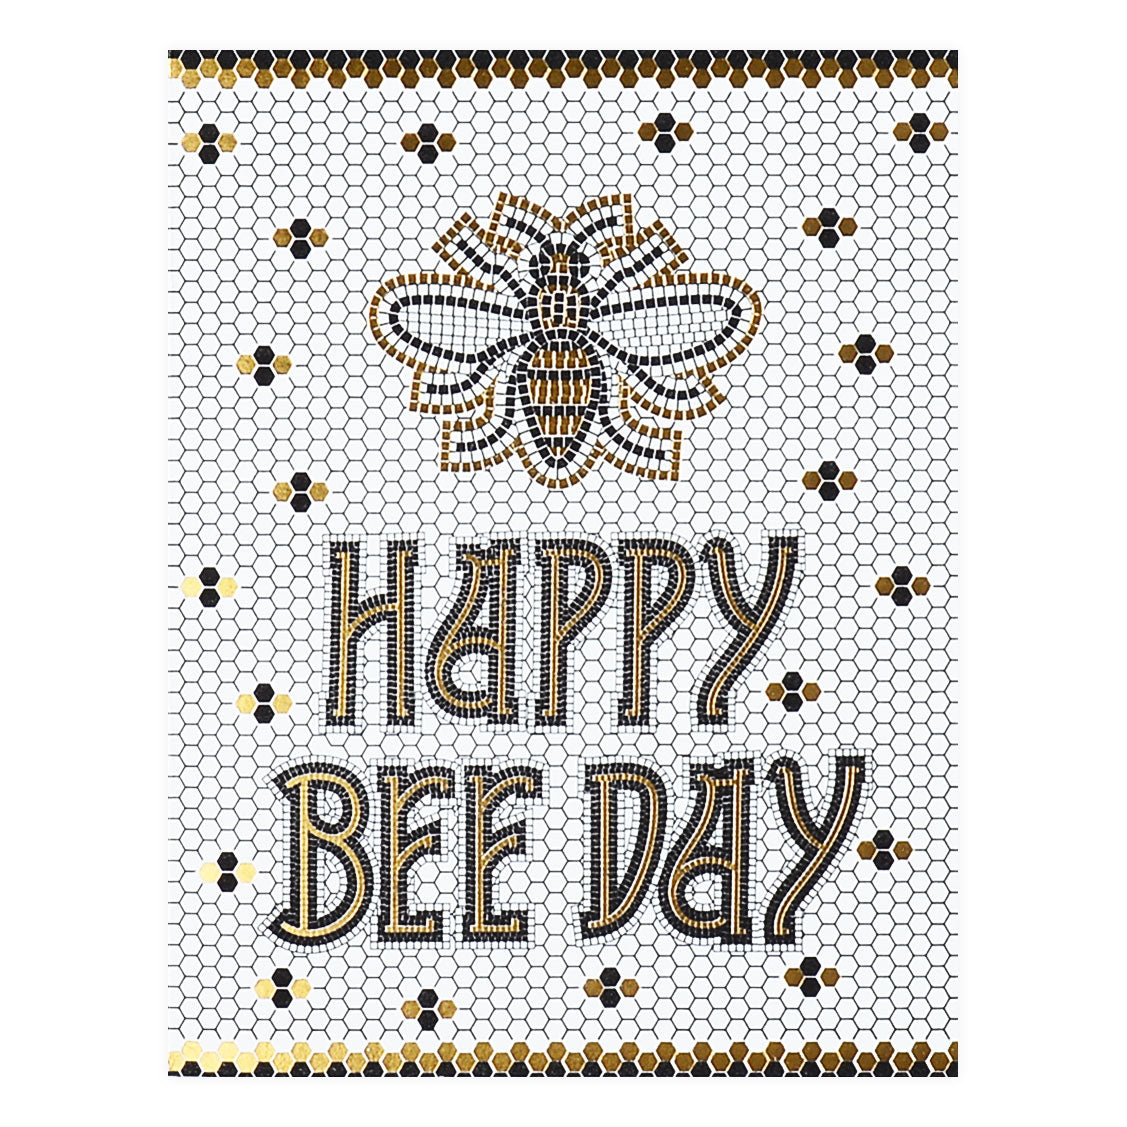 Bee Day Tile Birthday Card